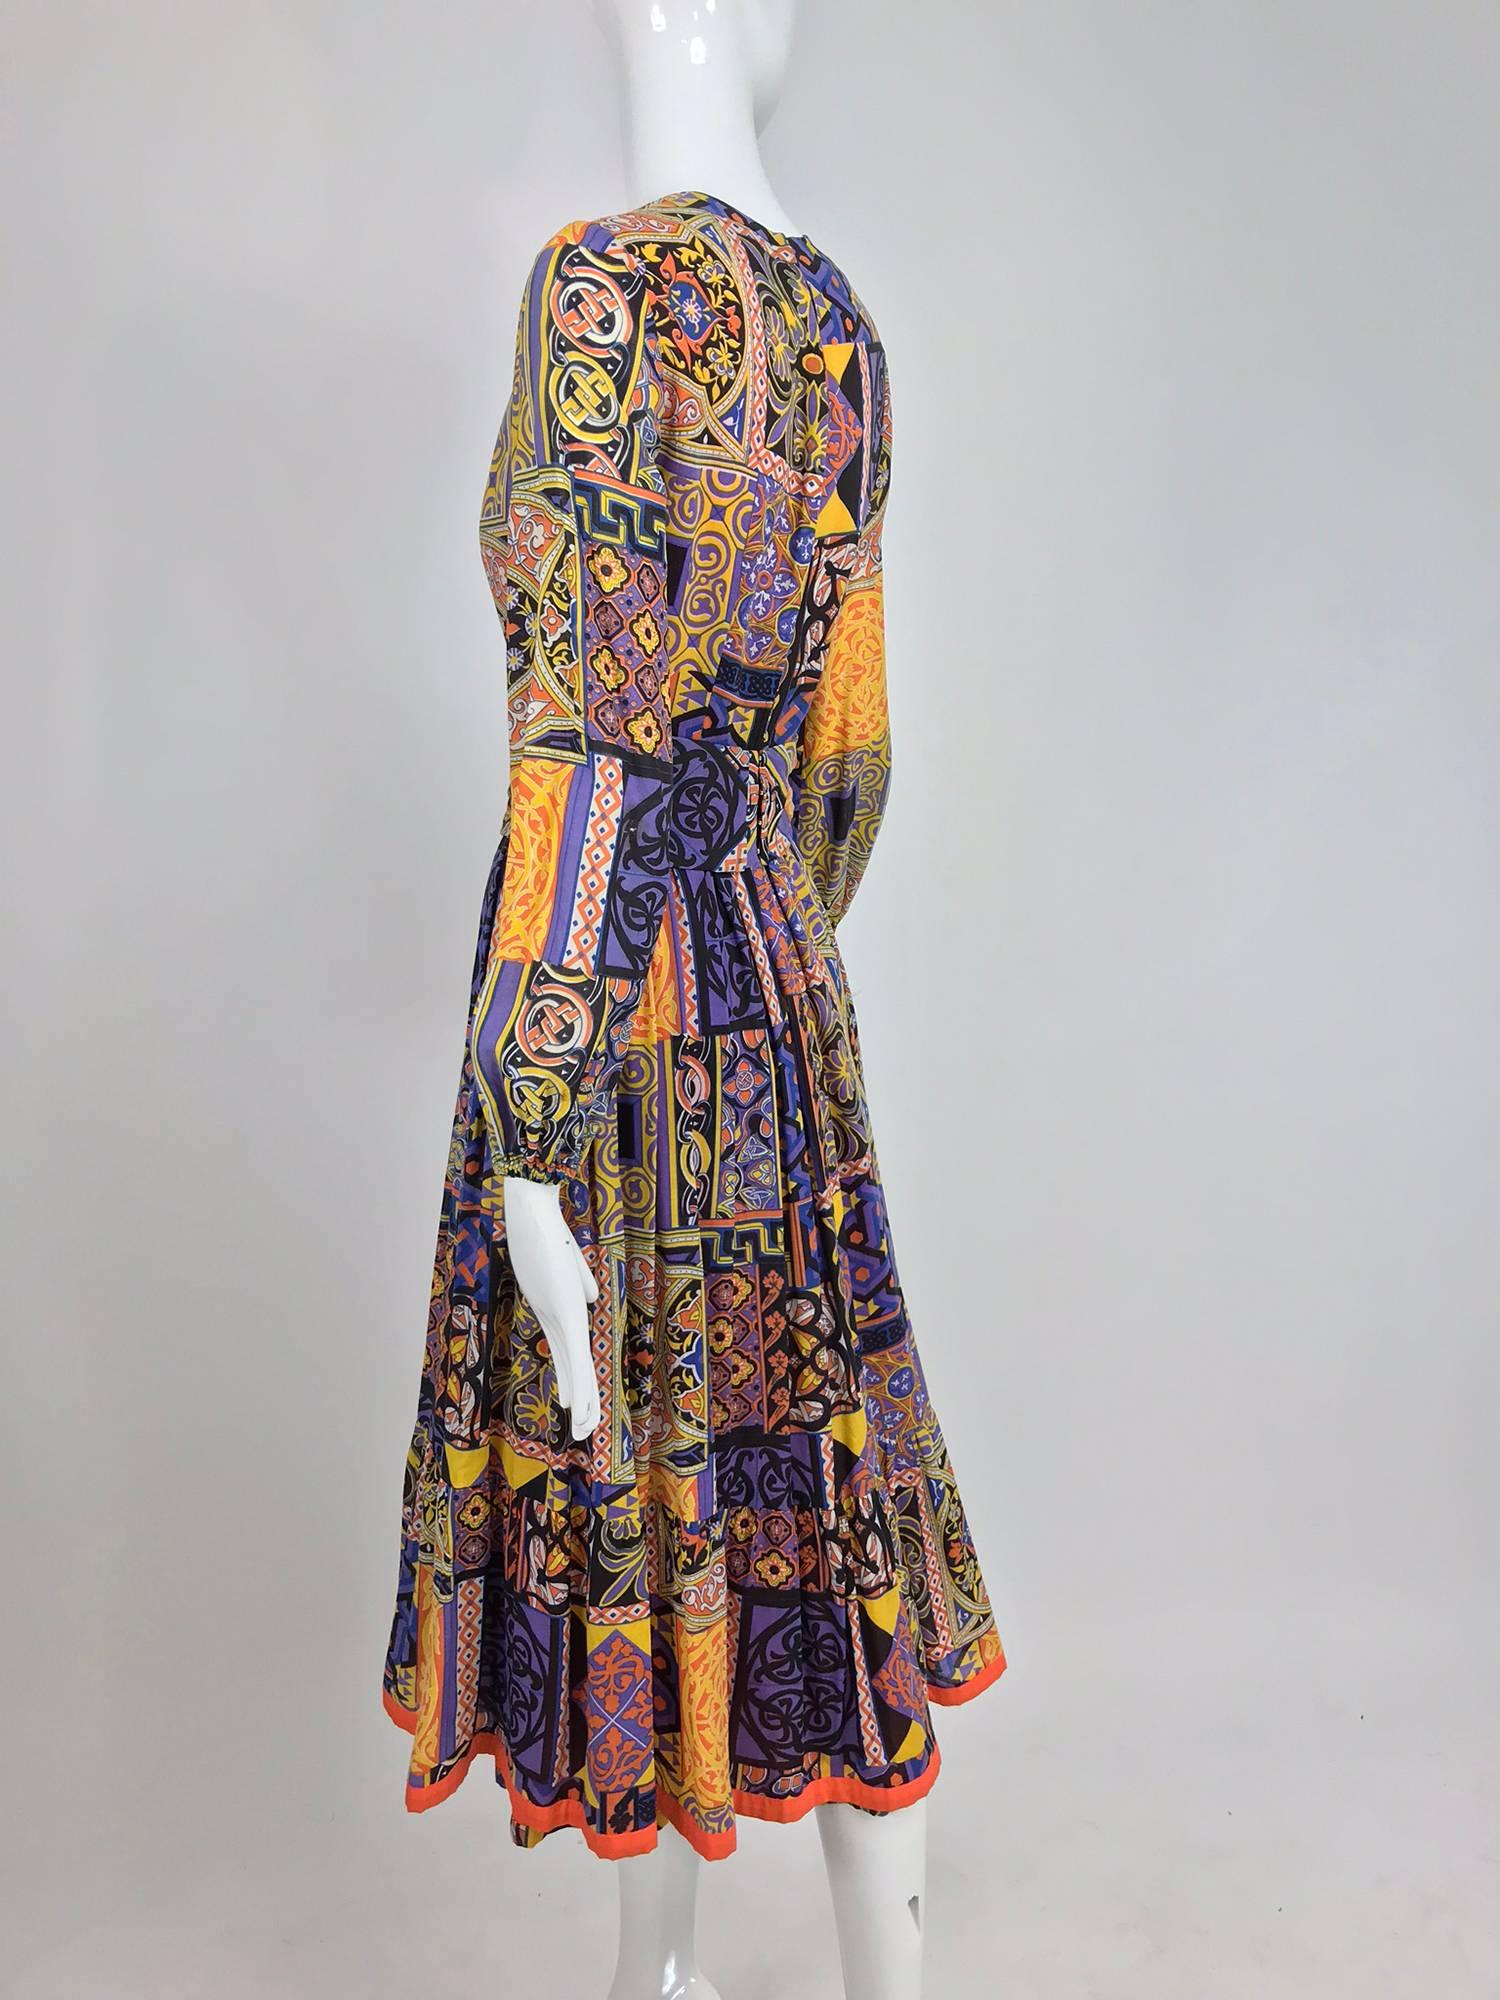 Moorish mosaic cotton print laced front bohemian dress 1960s 3